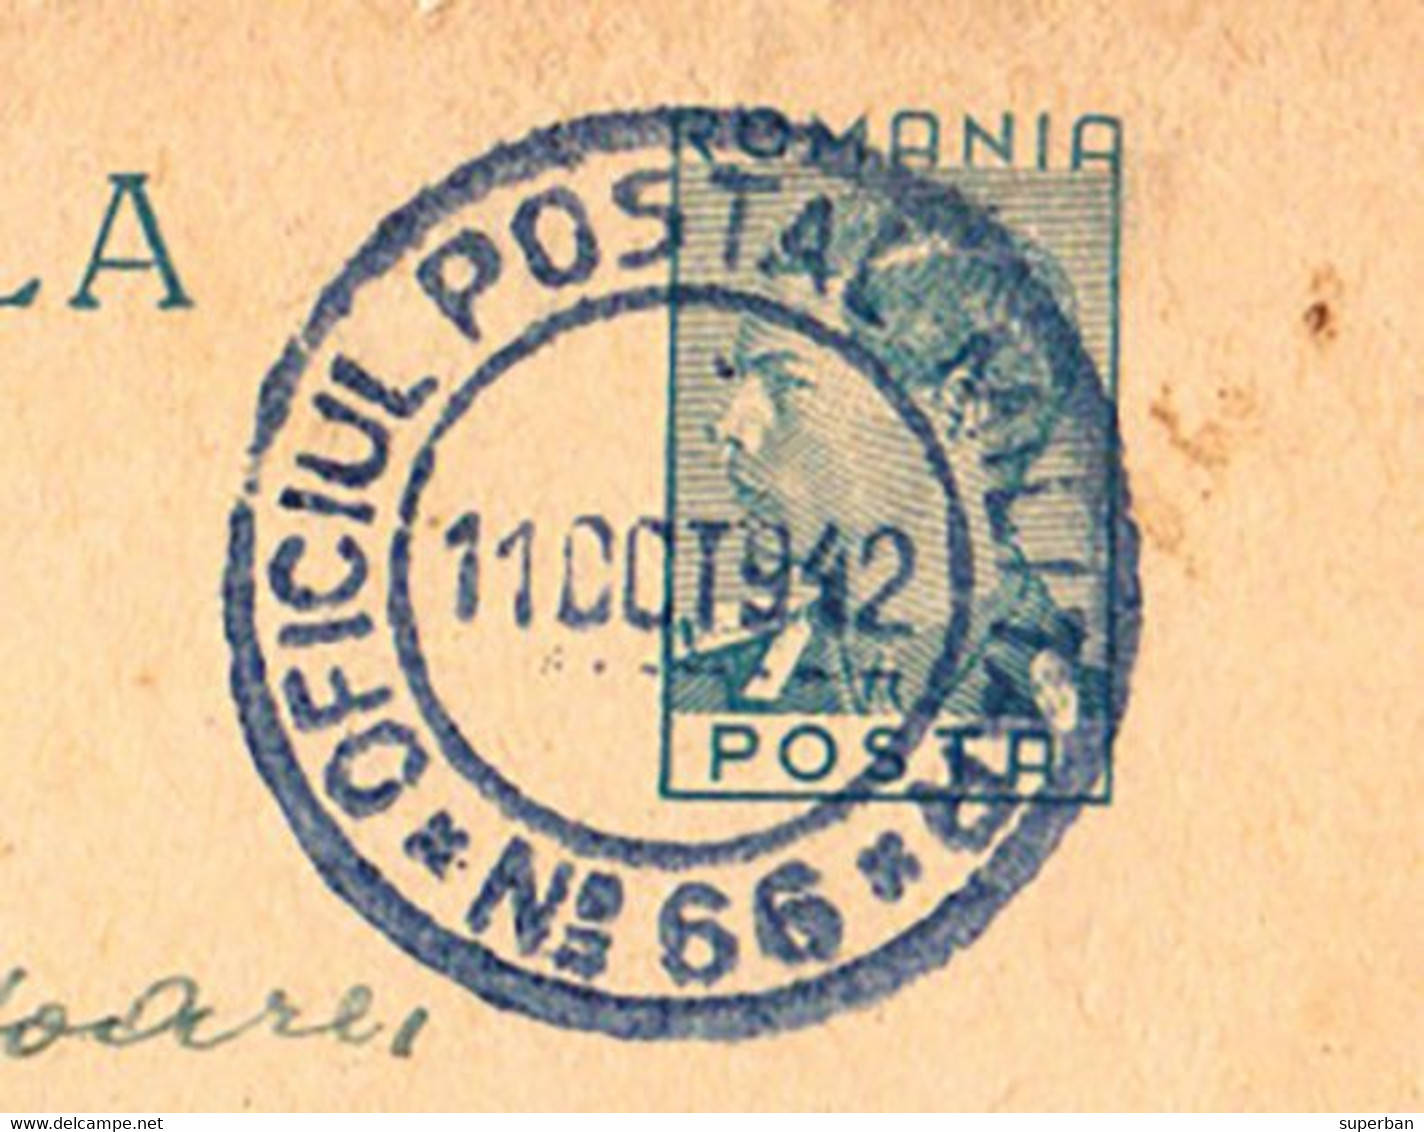 ROMANIA : CARTE ENTIER POSTAL / STATIONERY POSTCARD - MAILED By MILITARY POST : O. P. M. Nr. 66 - 1942 (ak913) - 2. Weltkrieg (Briefe)